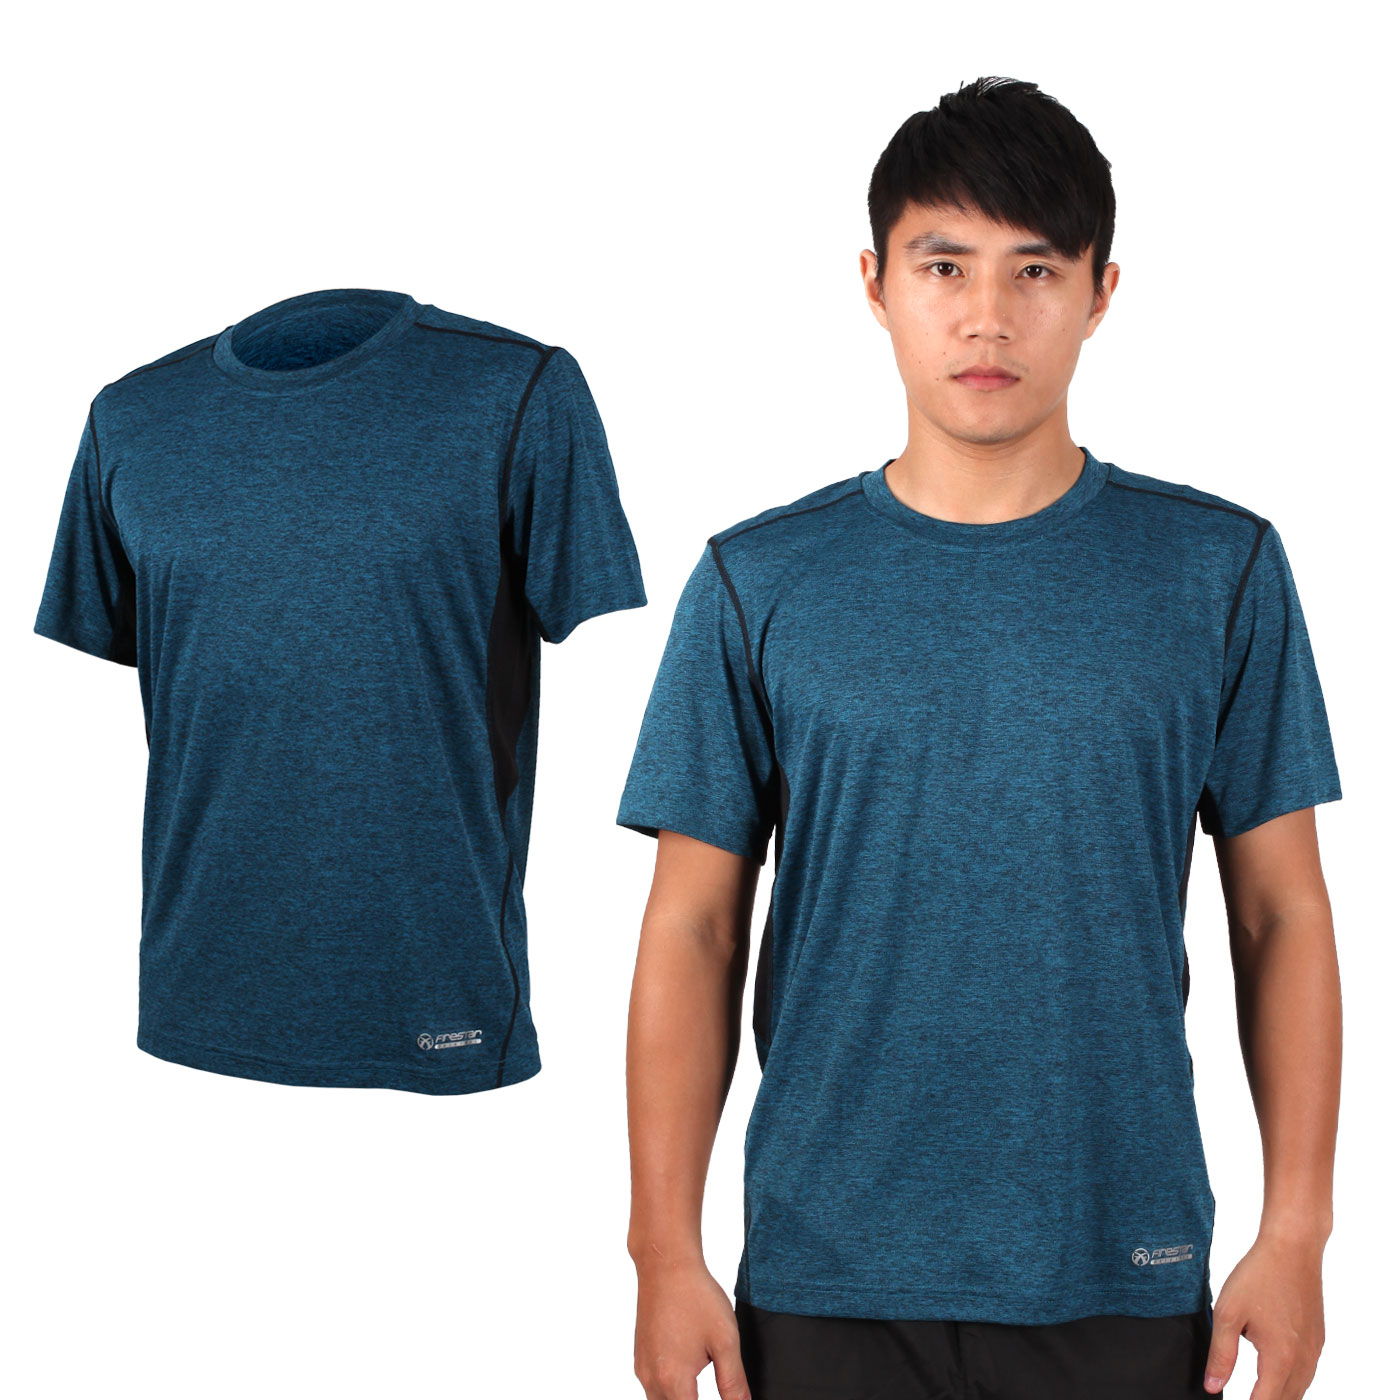 FIRESTAR 男吸排圓領短袖T恤 D7632-18 - 藍灰